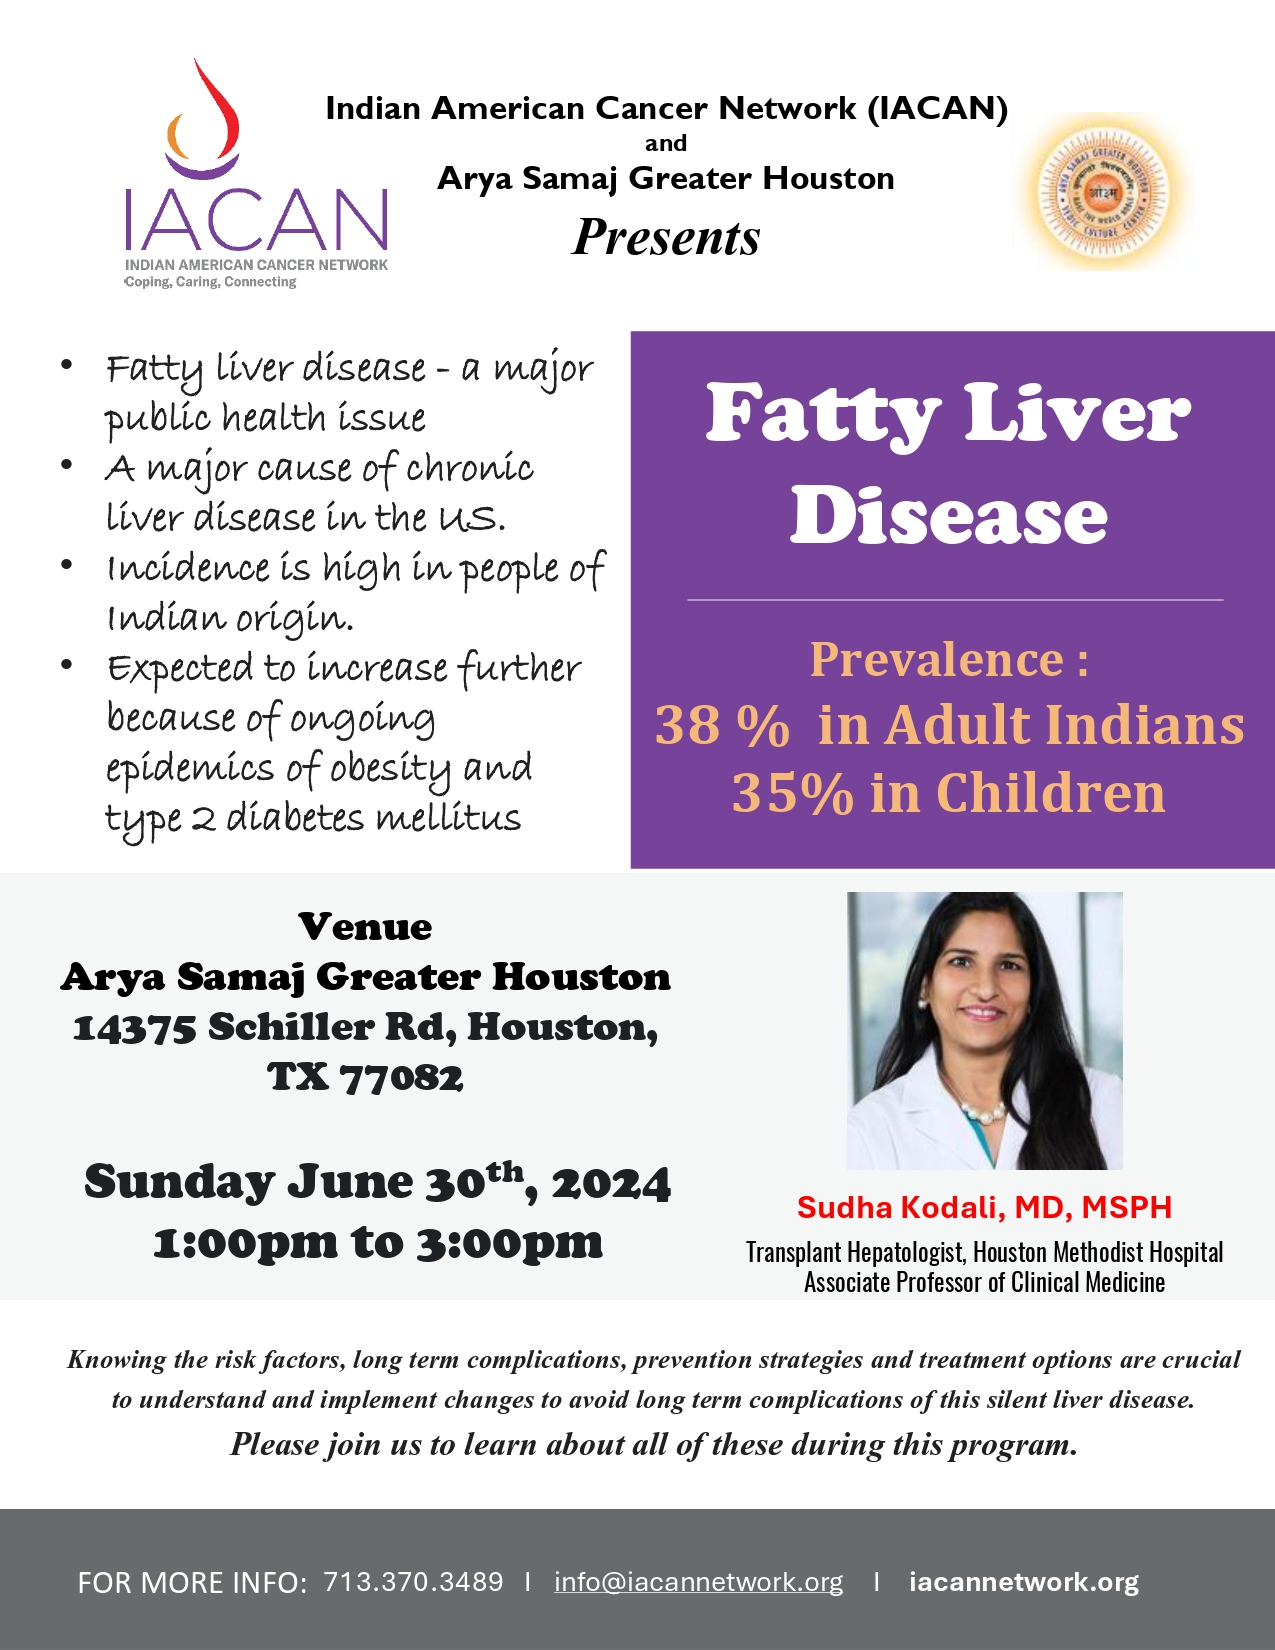 IACAN Fatty Liver Disease